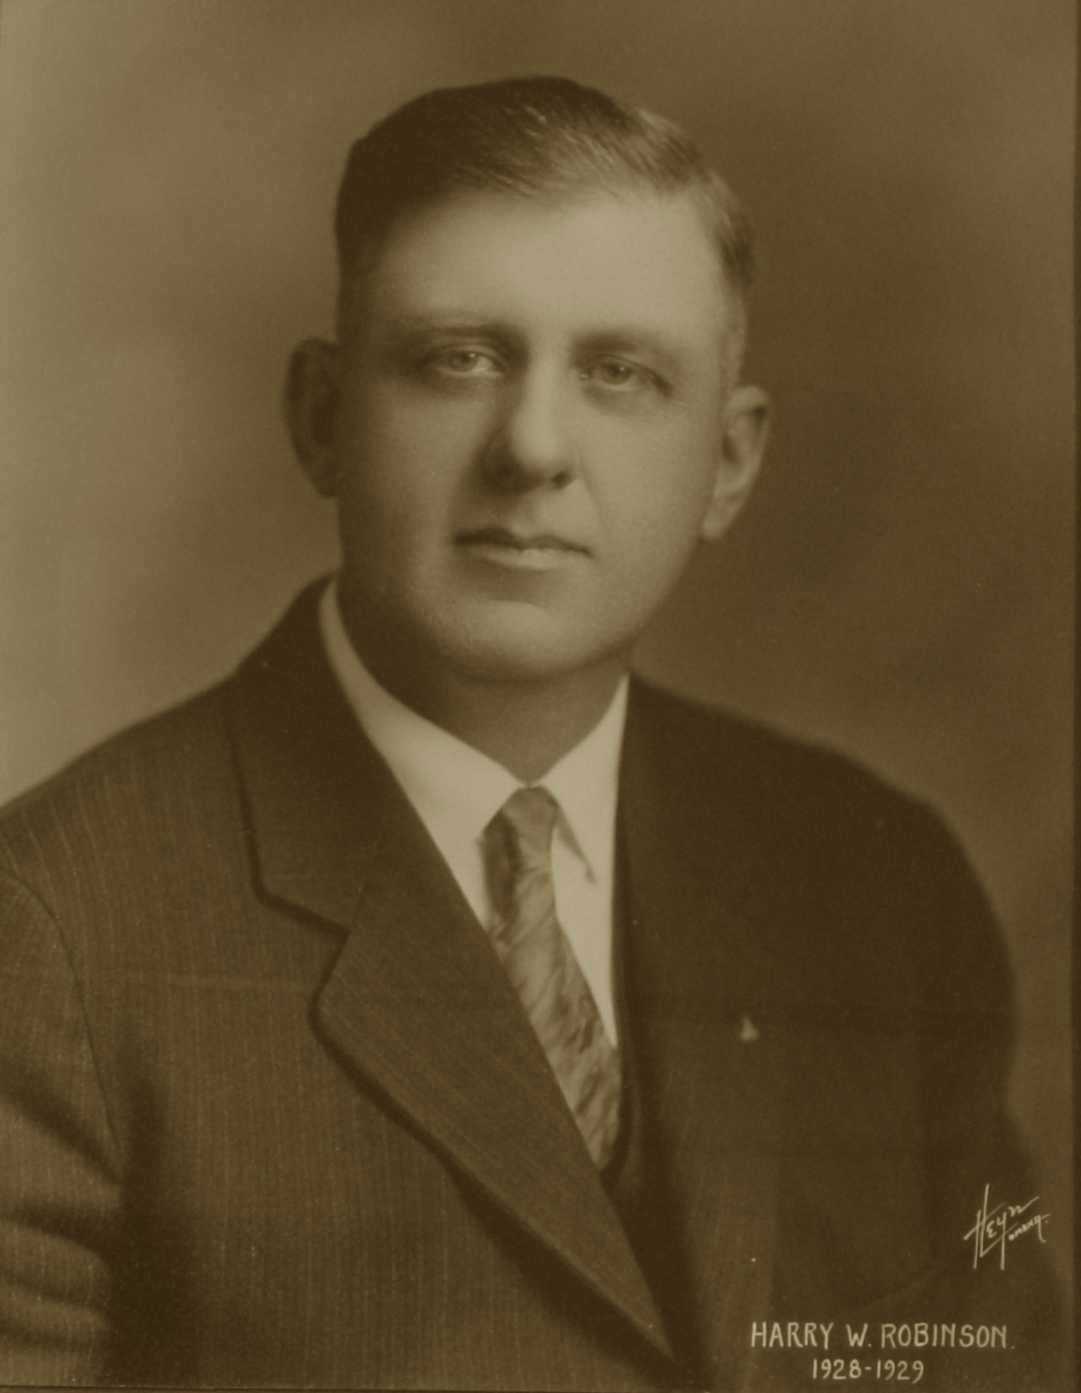 Harry W. Robinson, 1928-1929